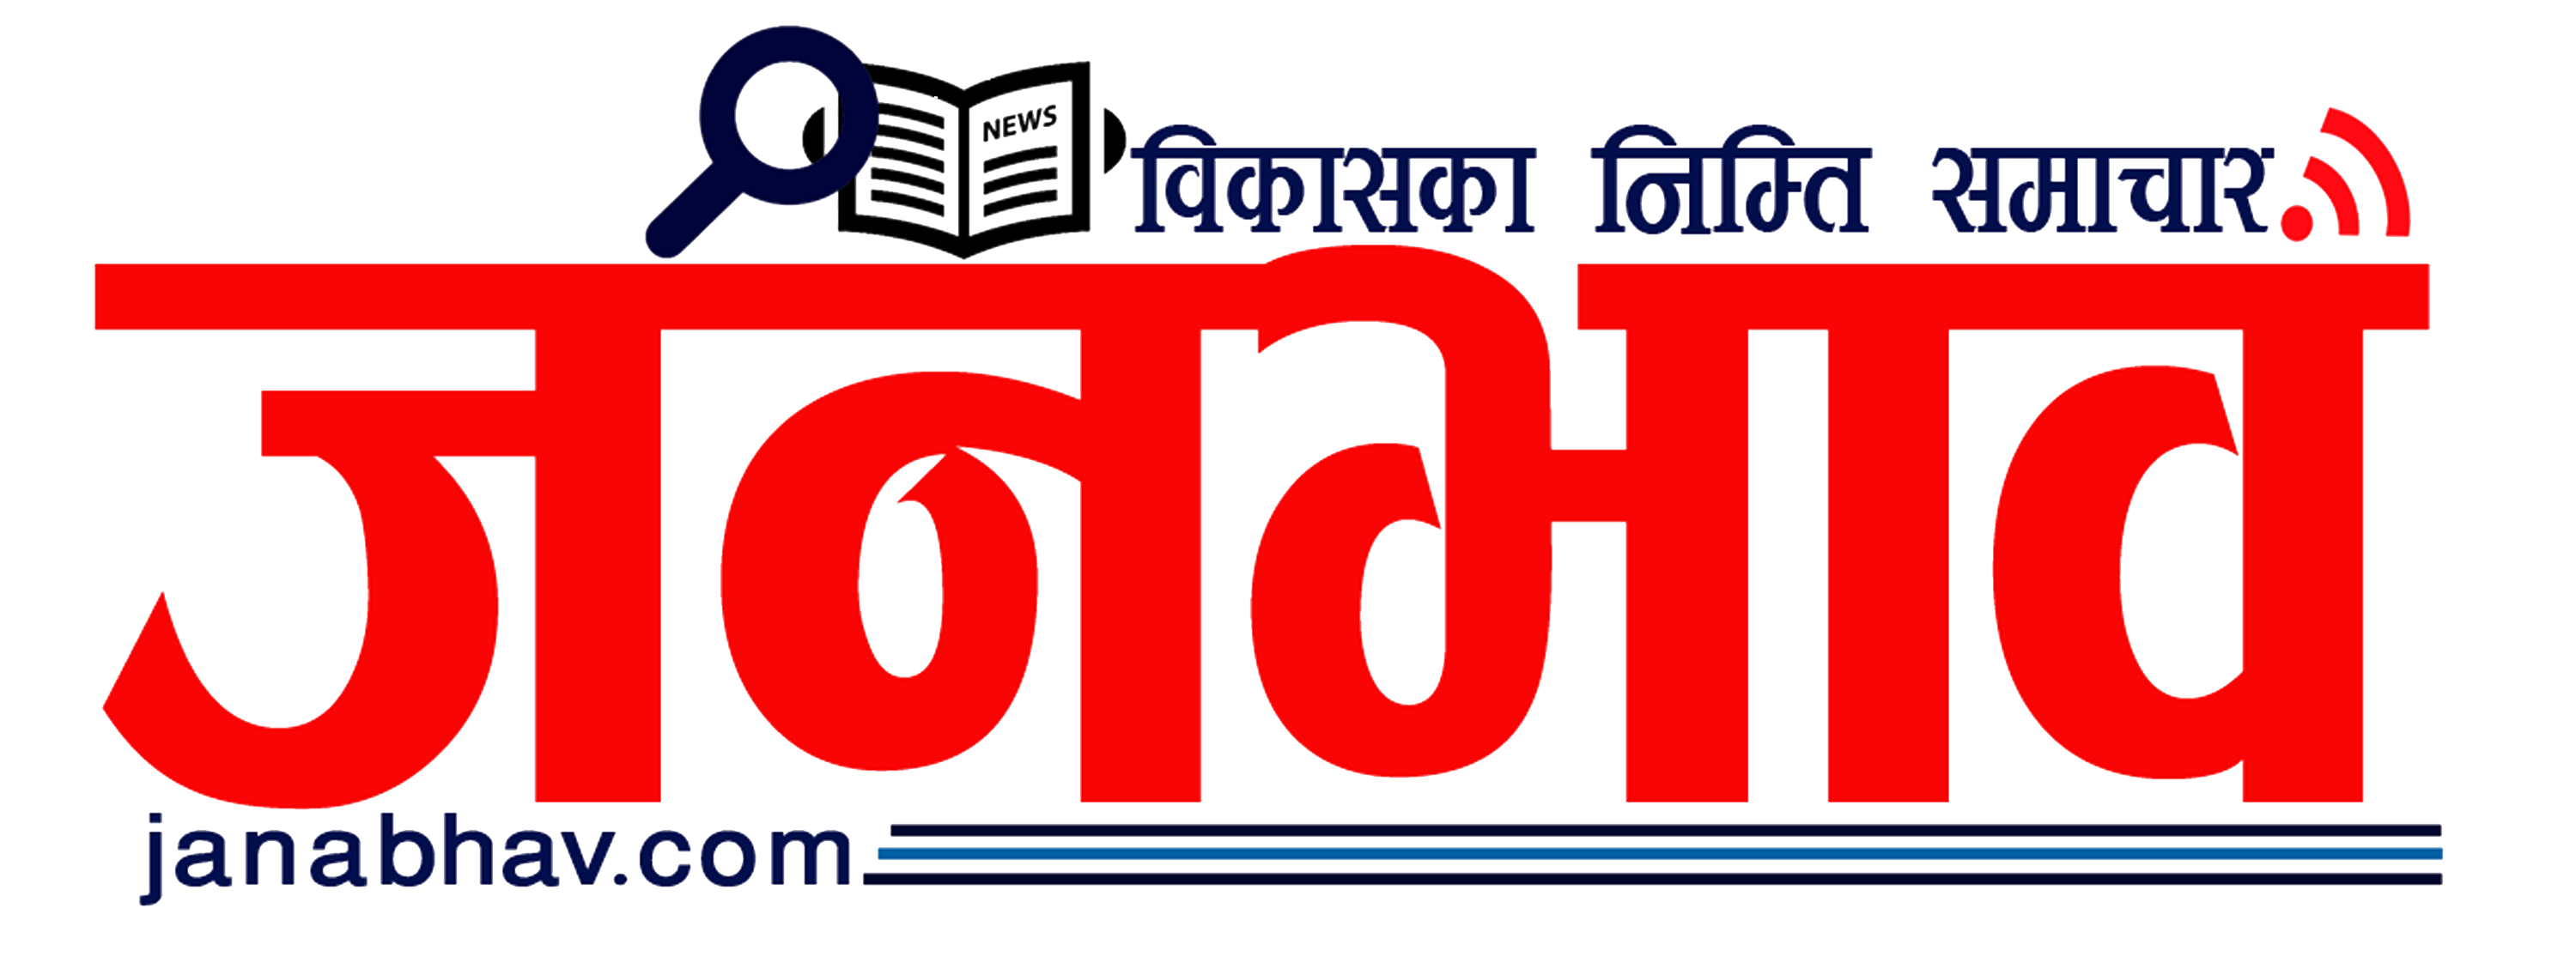 Janabhav Daily - Online News Portal in Nepal from Udayapur